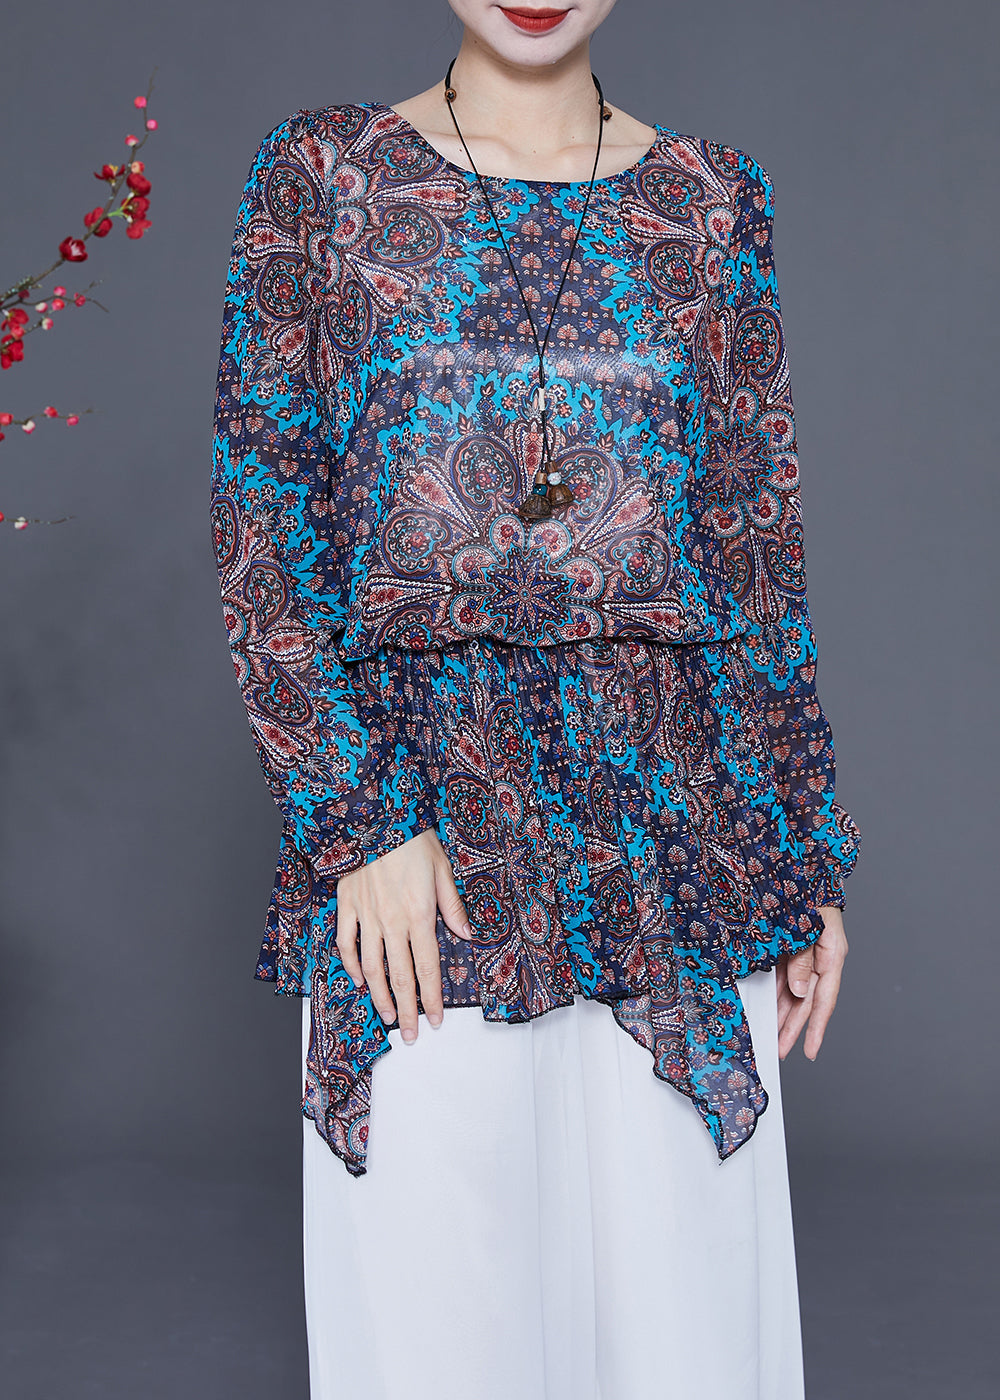 Blue Print Chiffon Shirt Tops Asymmetrical Hem Spring LY2335 - fabuloryshop